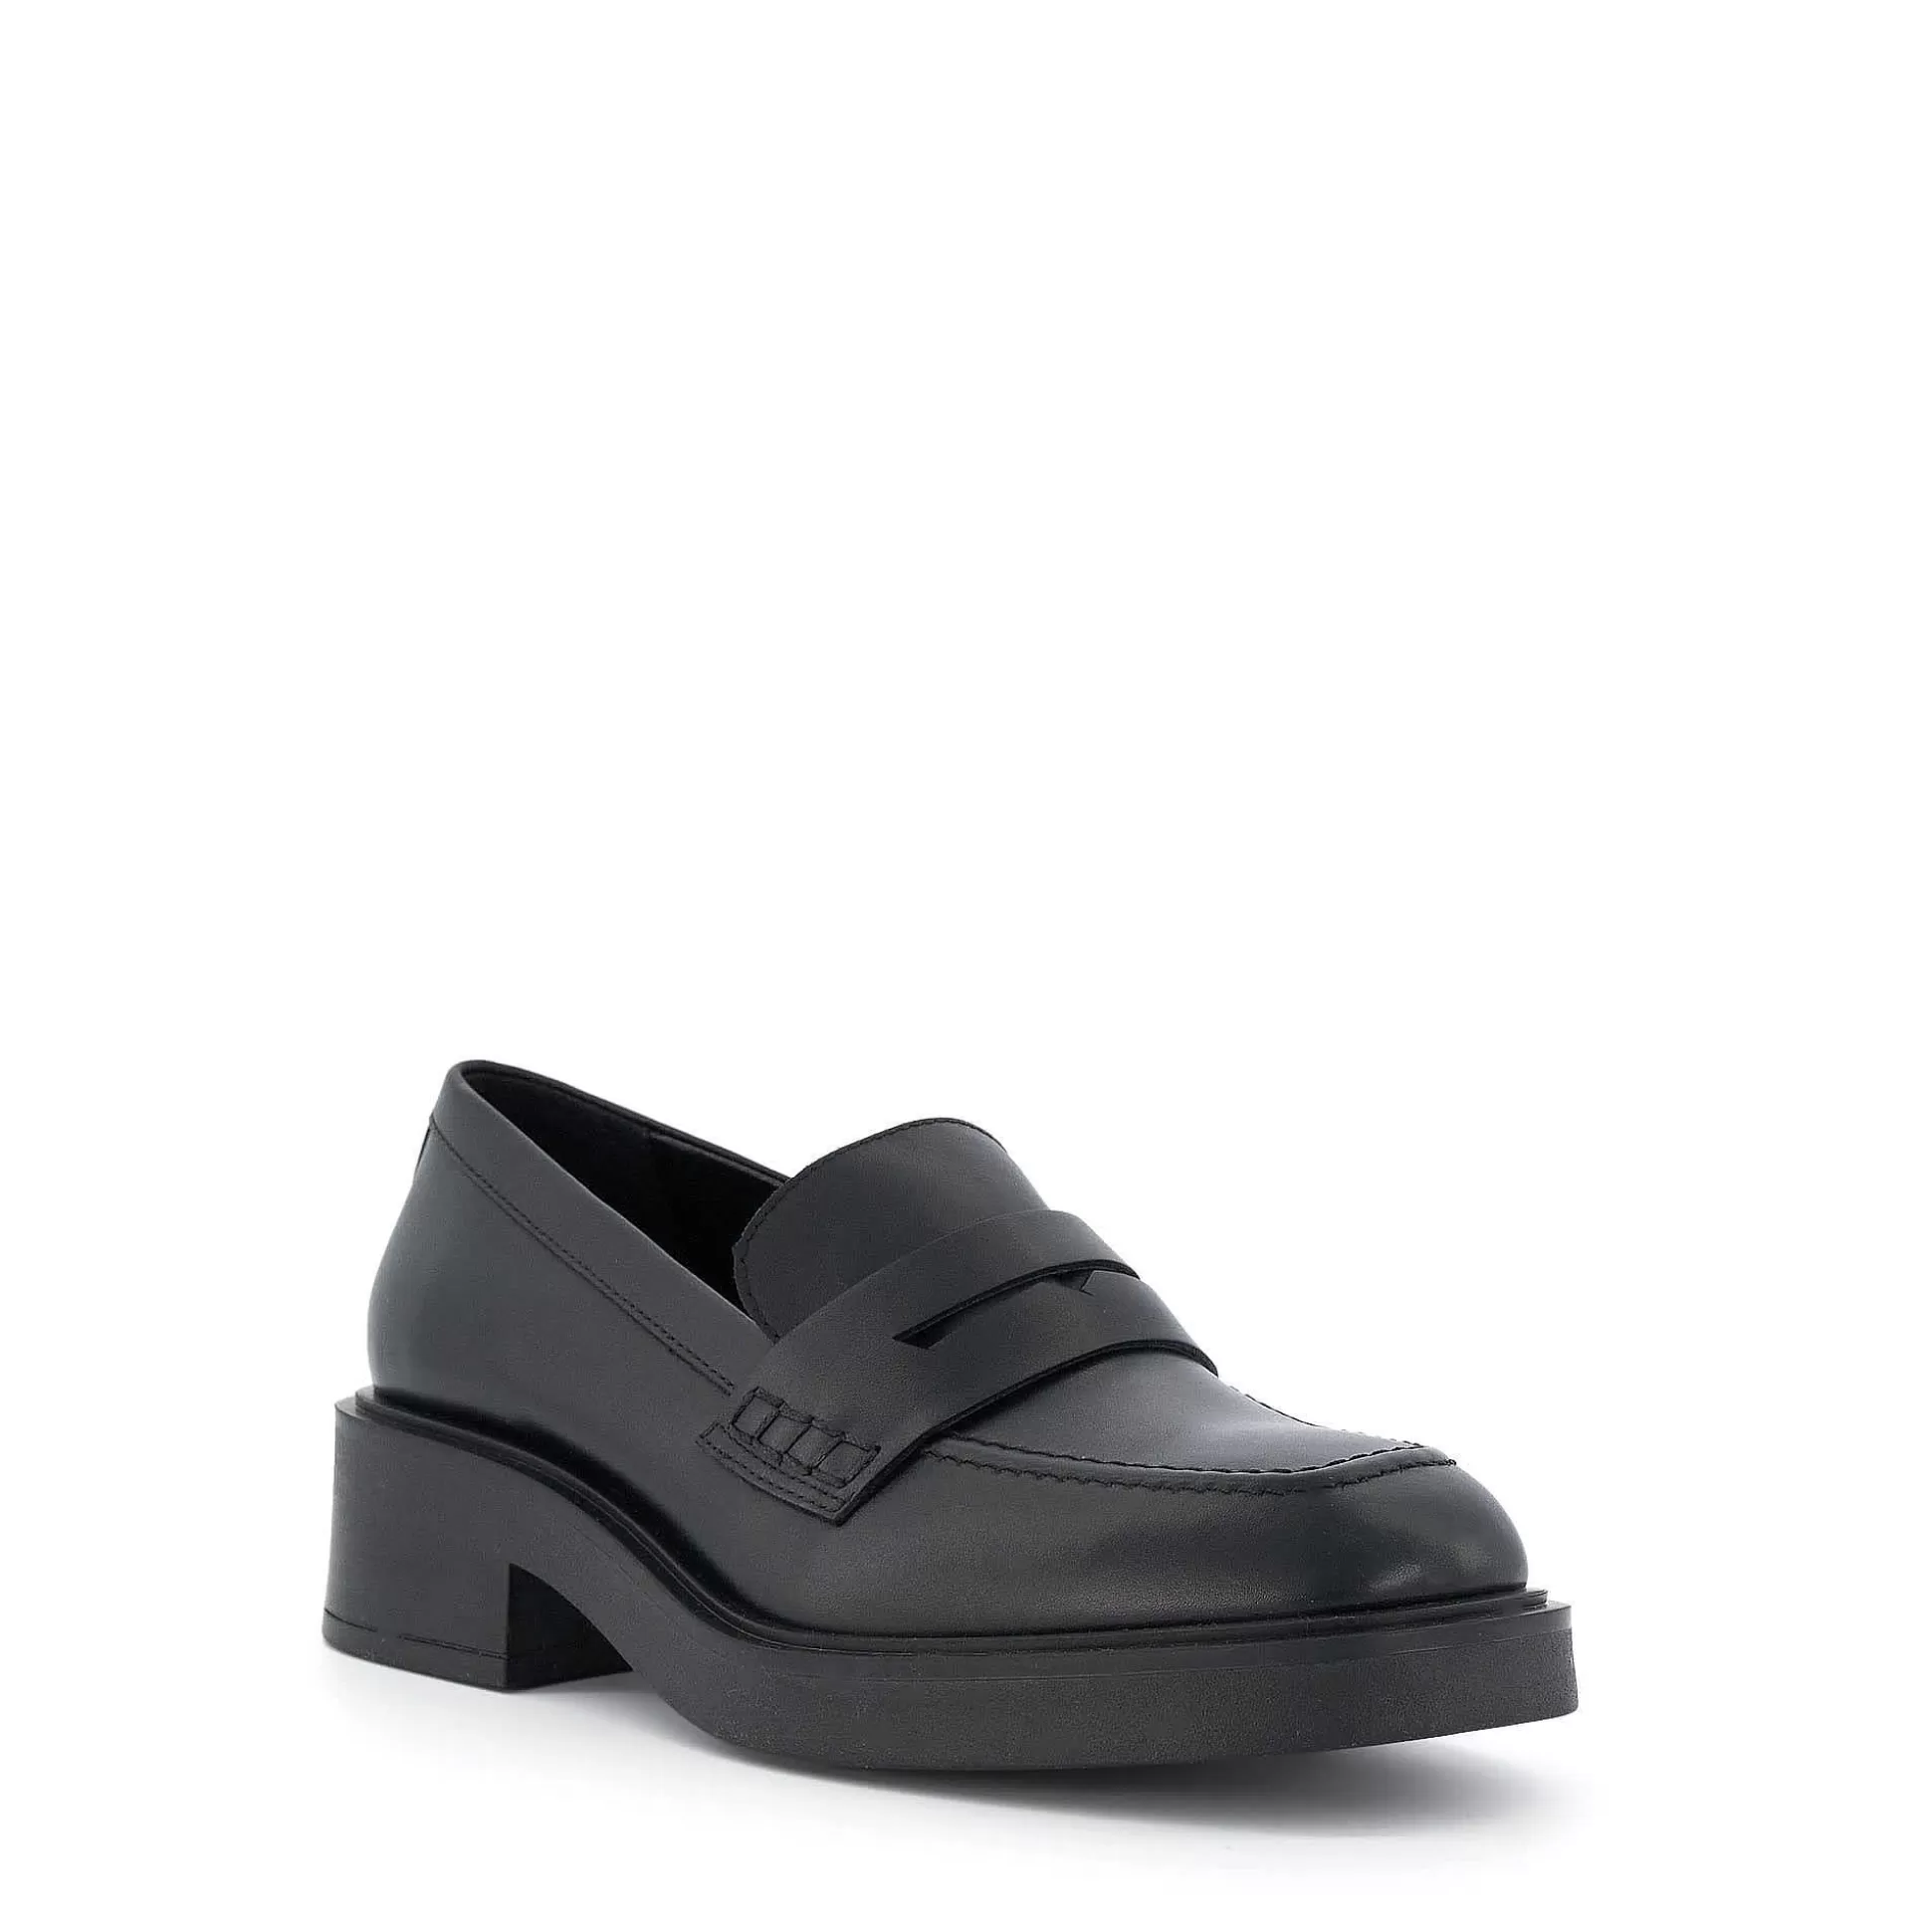 Dune London GALLIVANTING - BLACK-Women Flat Shoes | Loafers